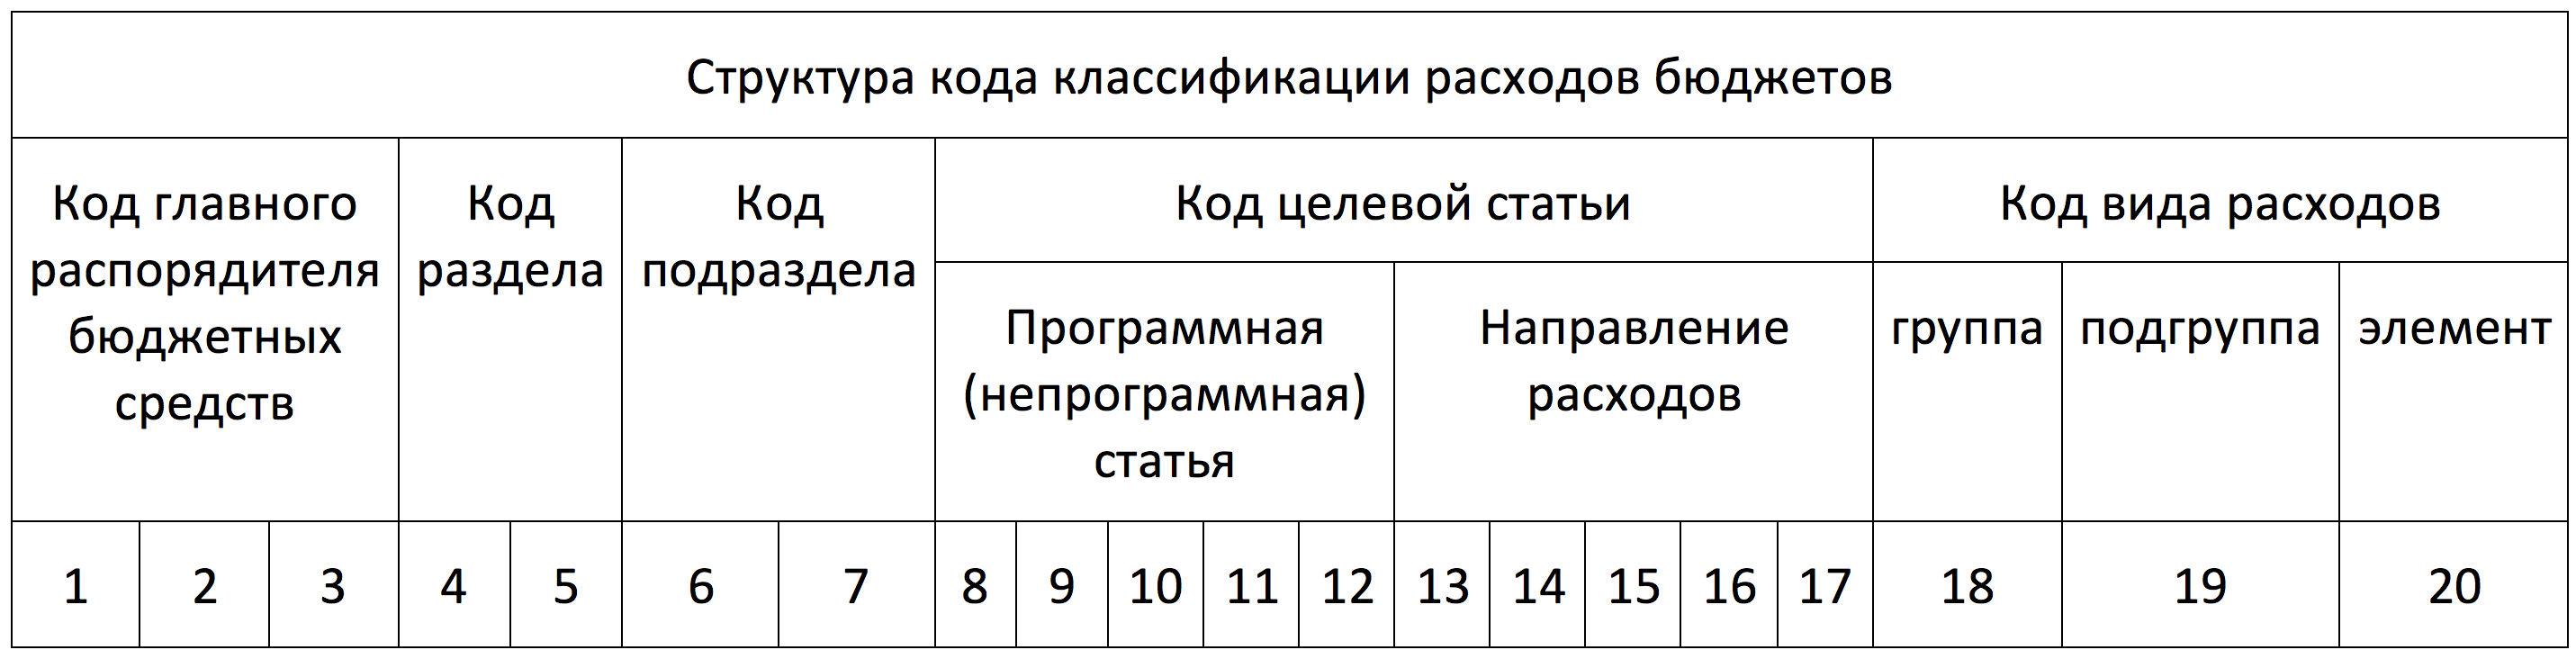 Структура кода классификации расходов бюджета РФ